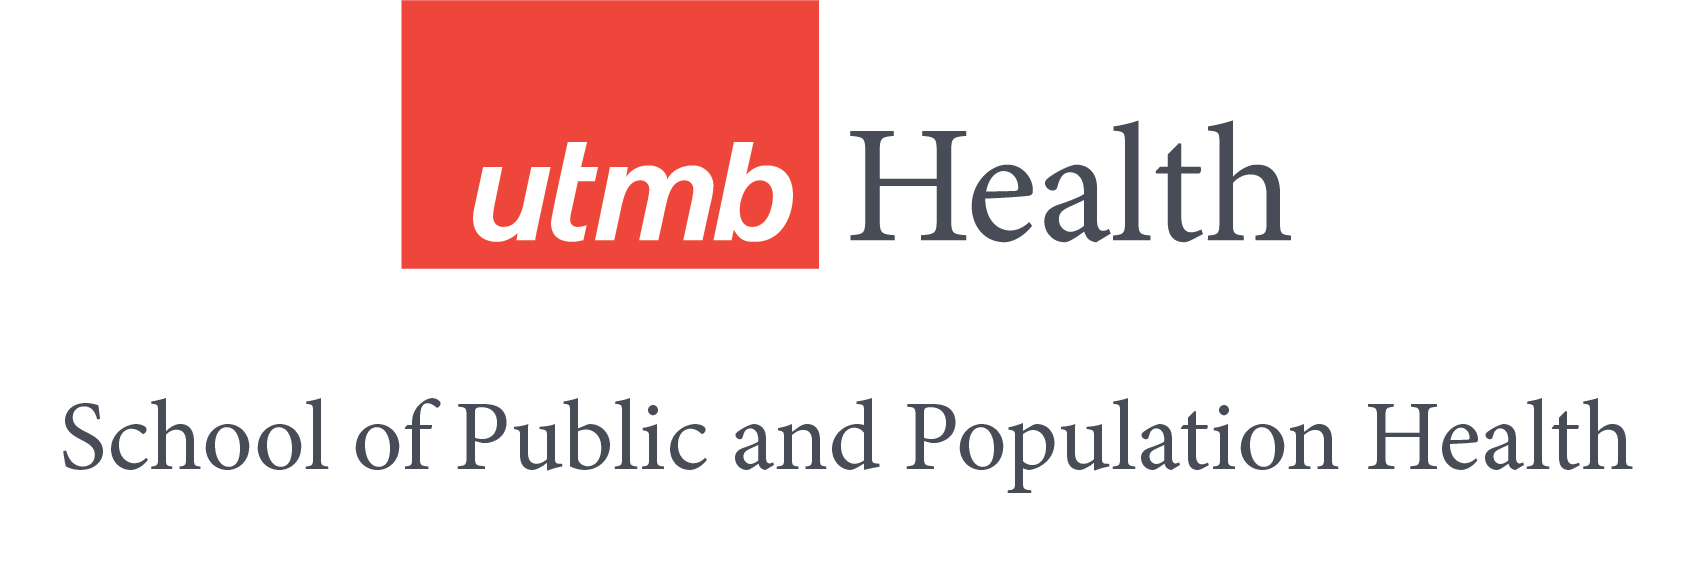 University of Texas Medical Branch - School of Public & Population Health